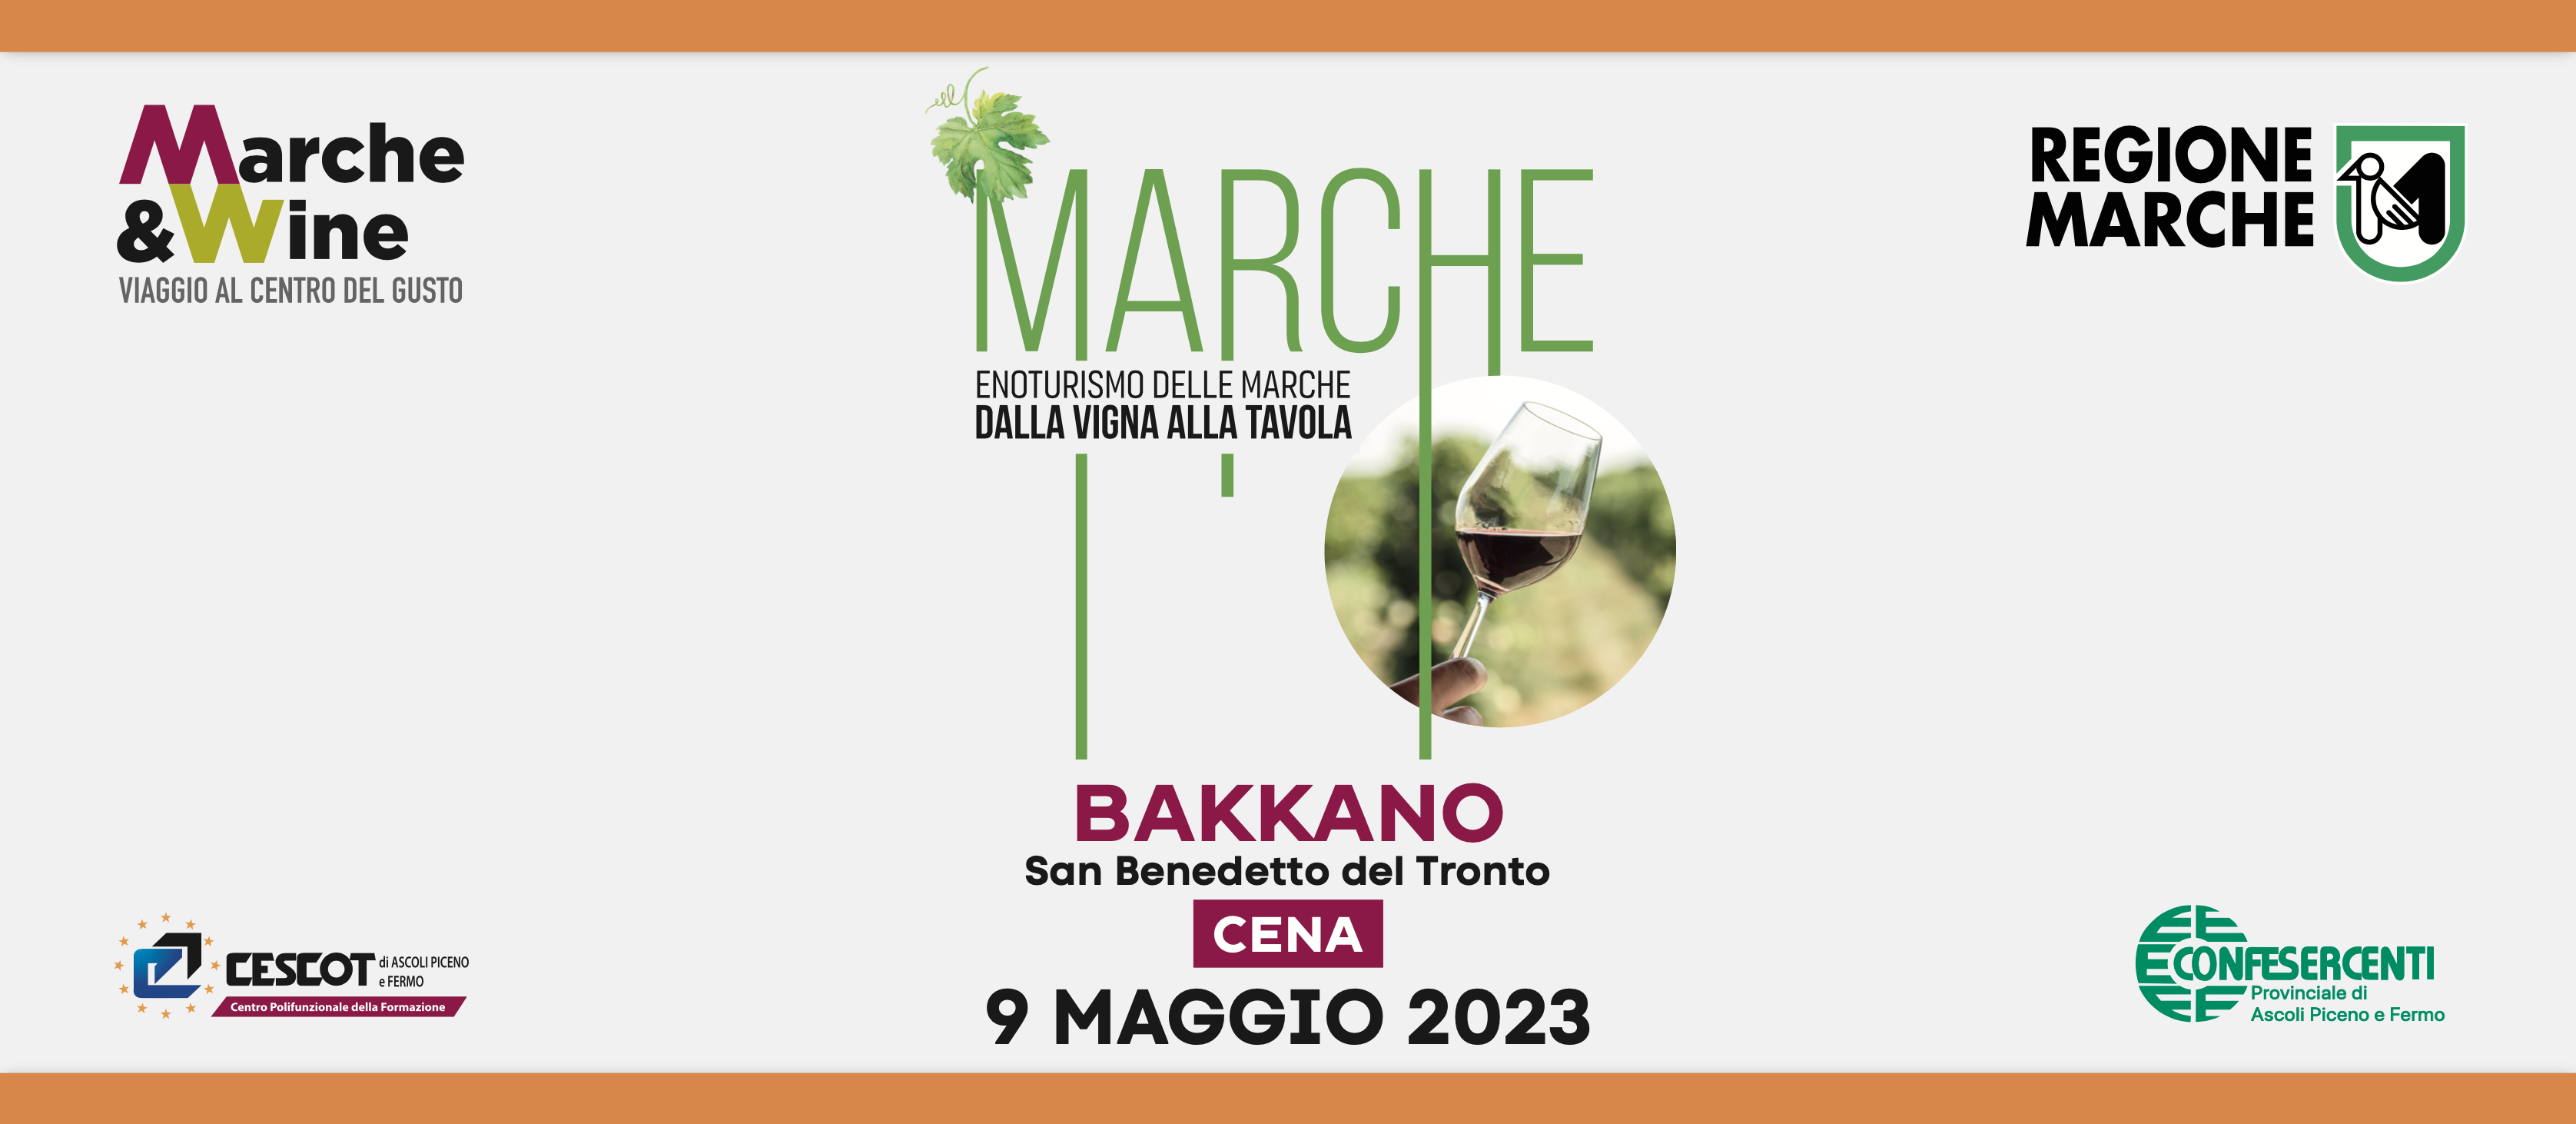 Marche & Wine da Bakkano